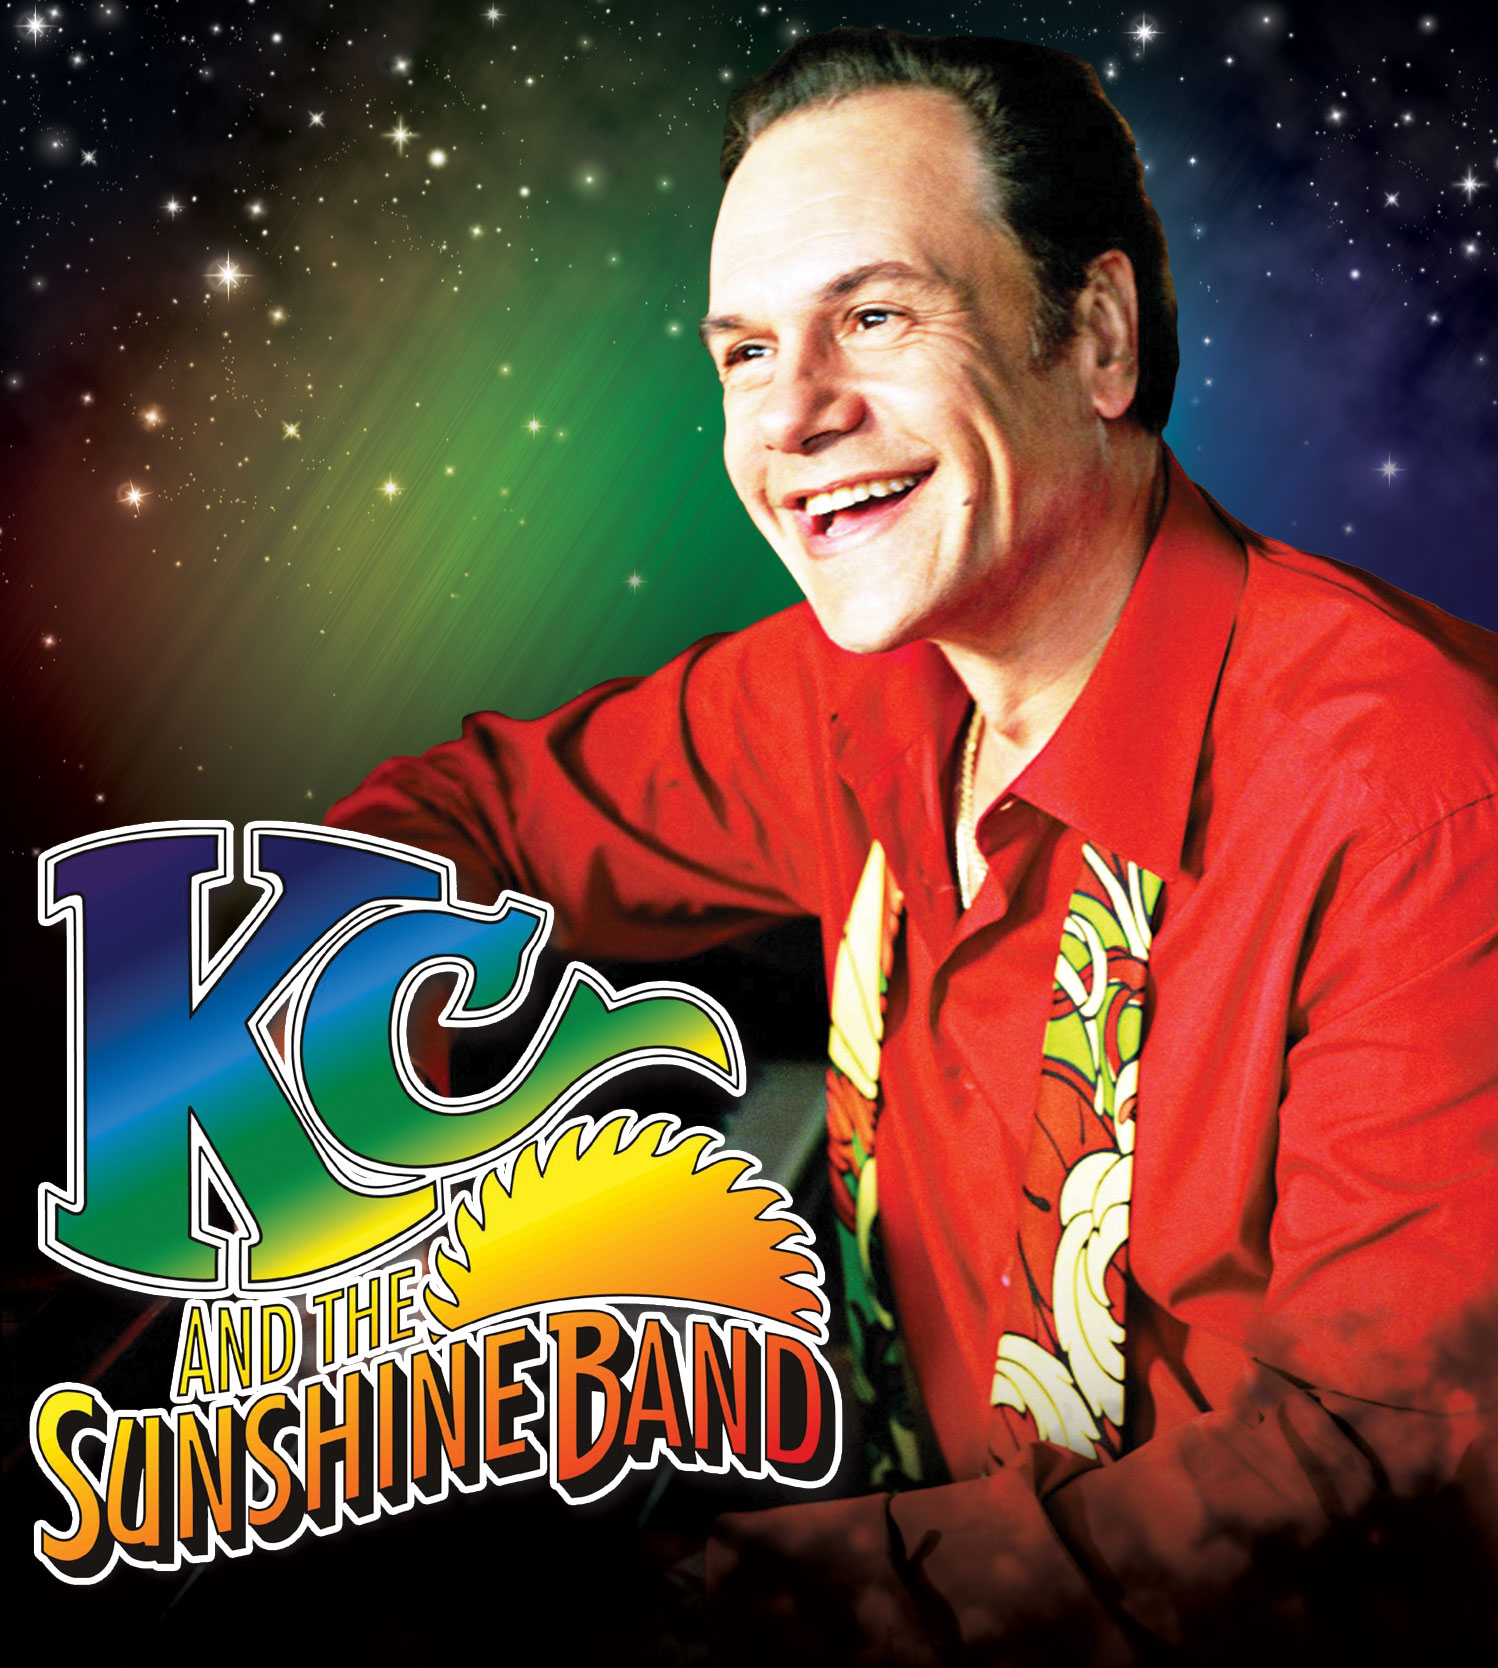 KC & the Sunshine Band image courtesy of Fallsview Casino